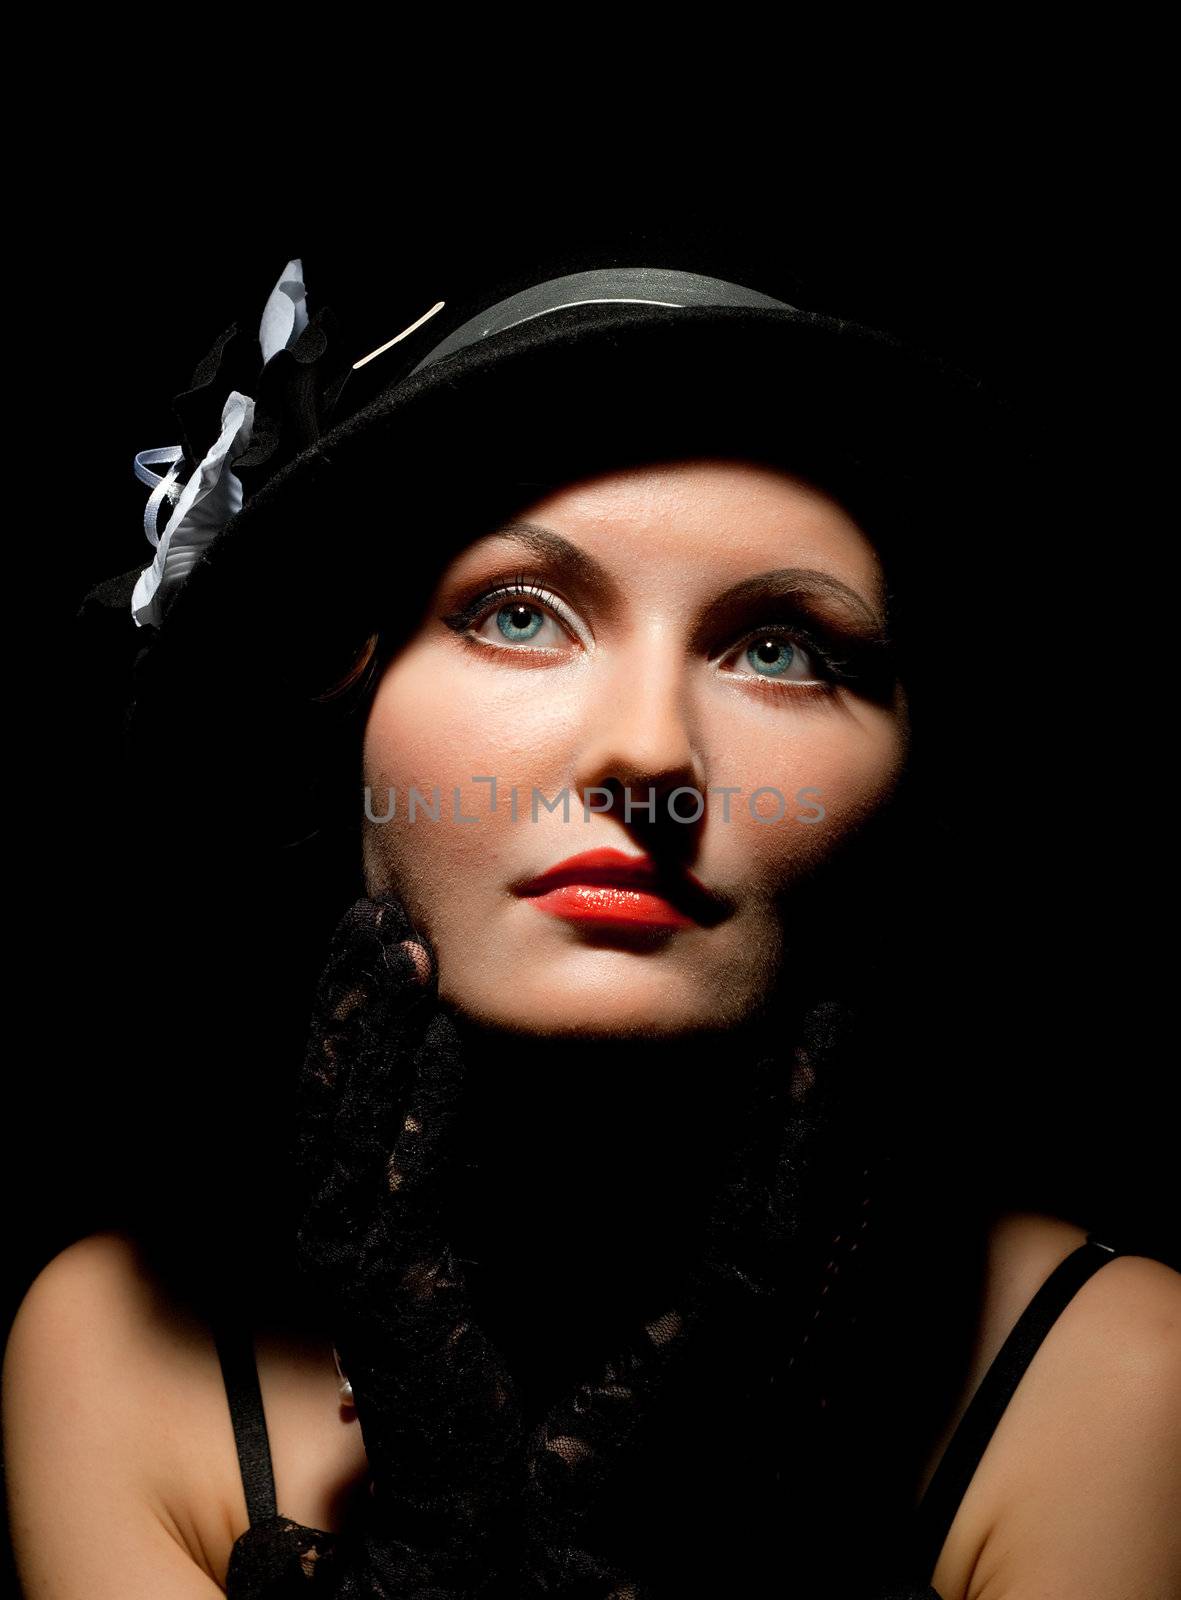 Woman retro revival portrait.girl in hat